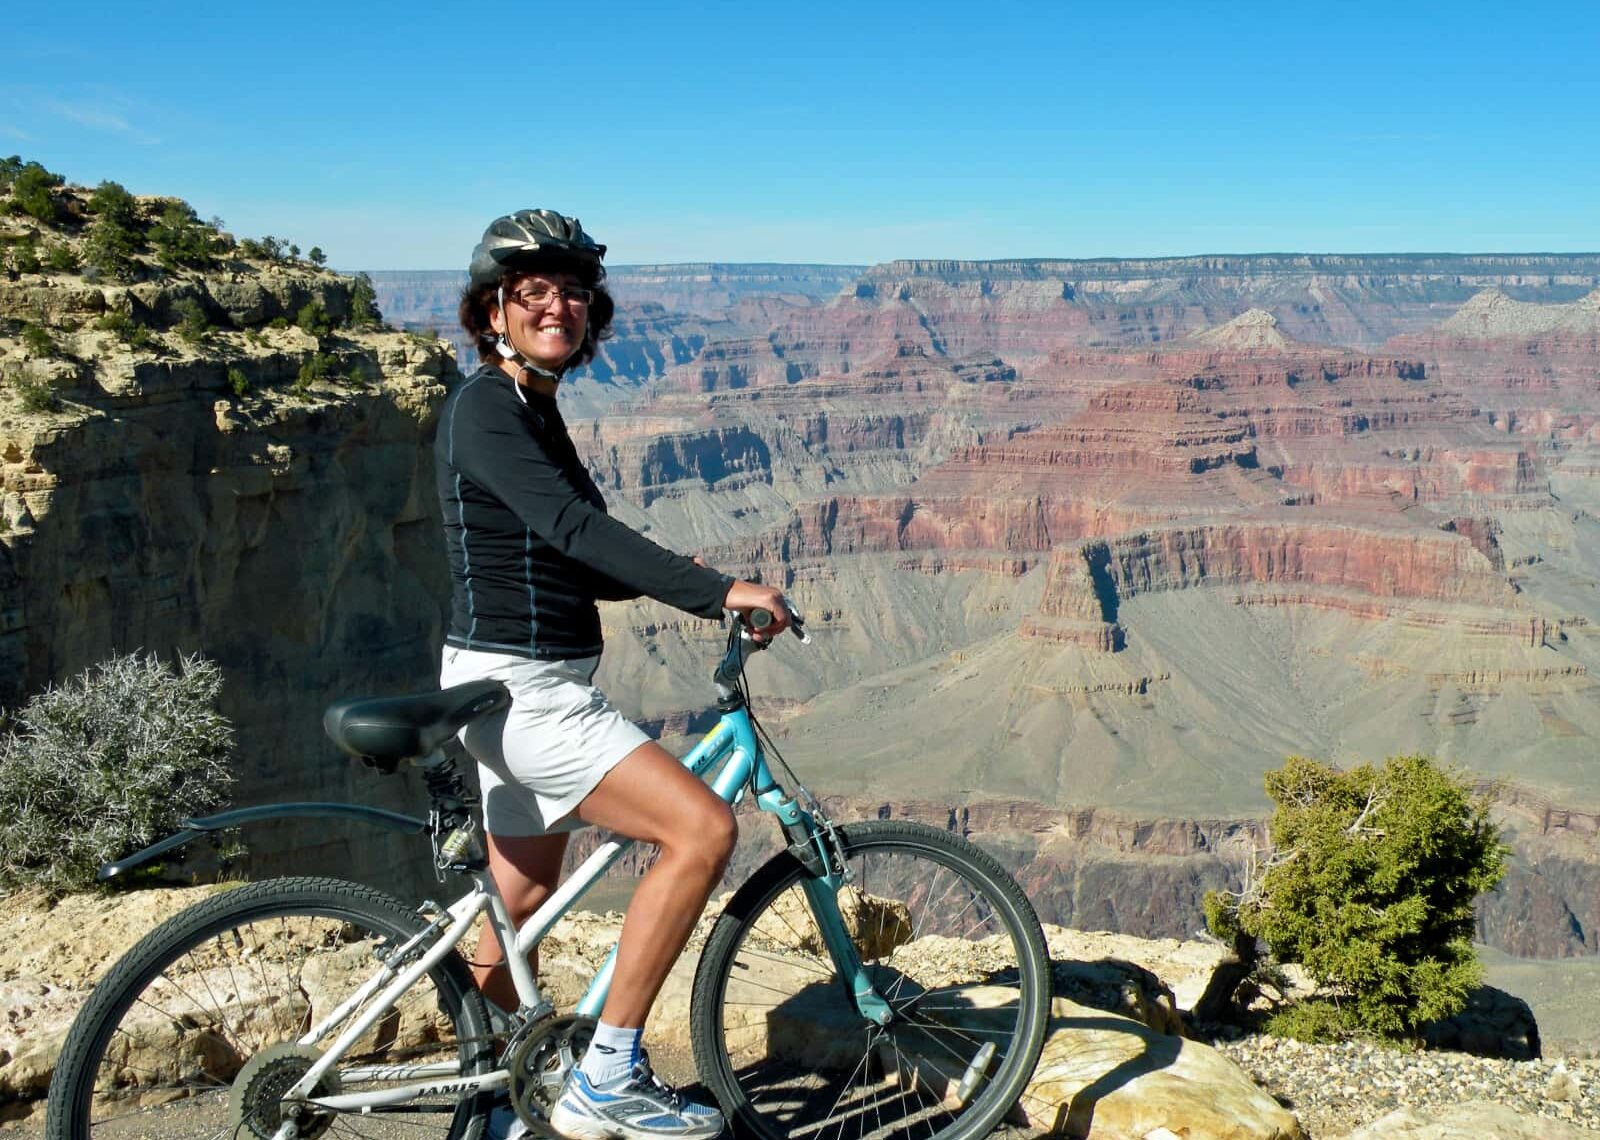 Woman on bike over looking canyon